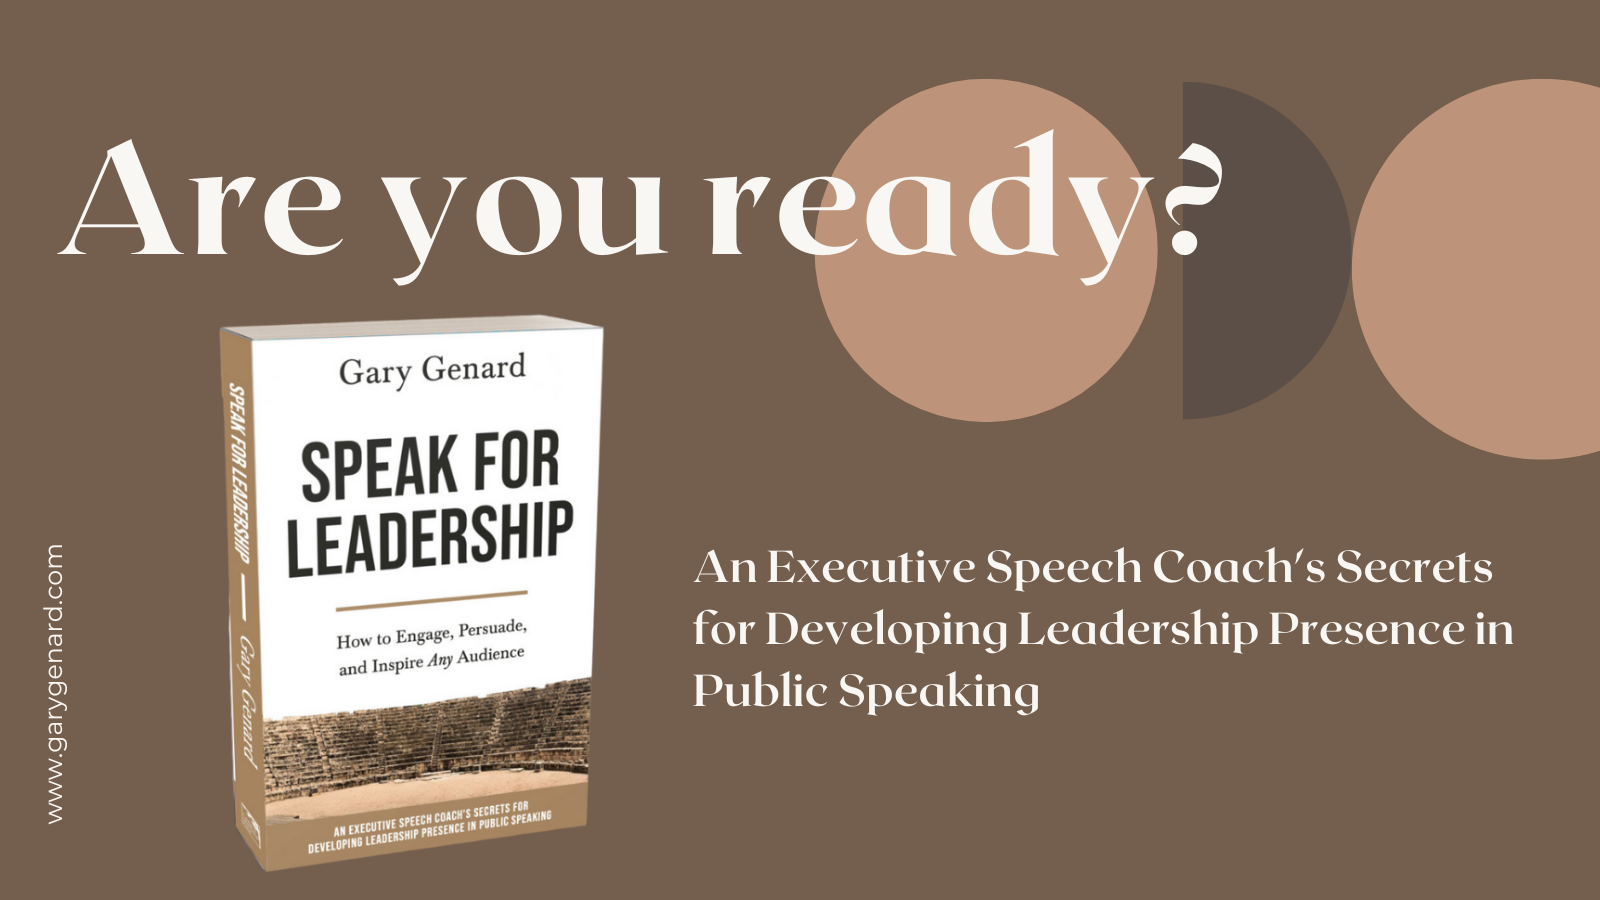 Dr. Gary Genard's book on speaking as a leader, Speak for Leadership